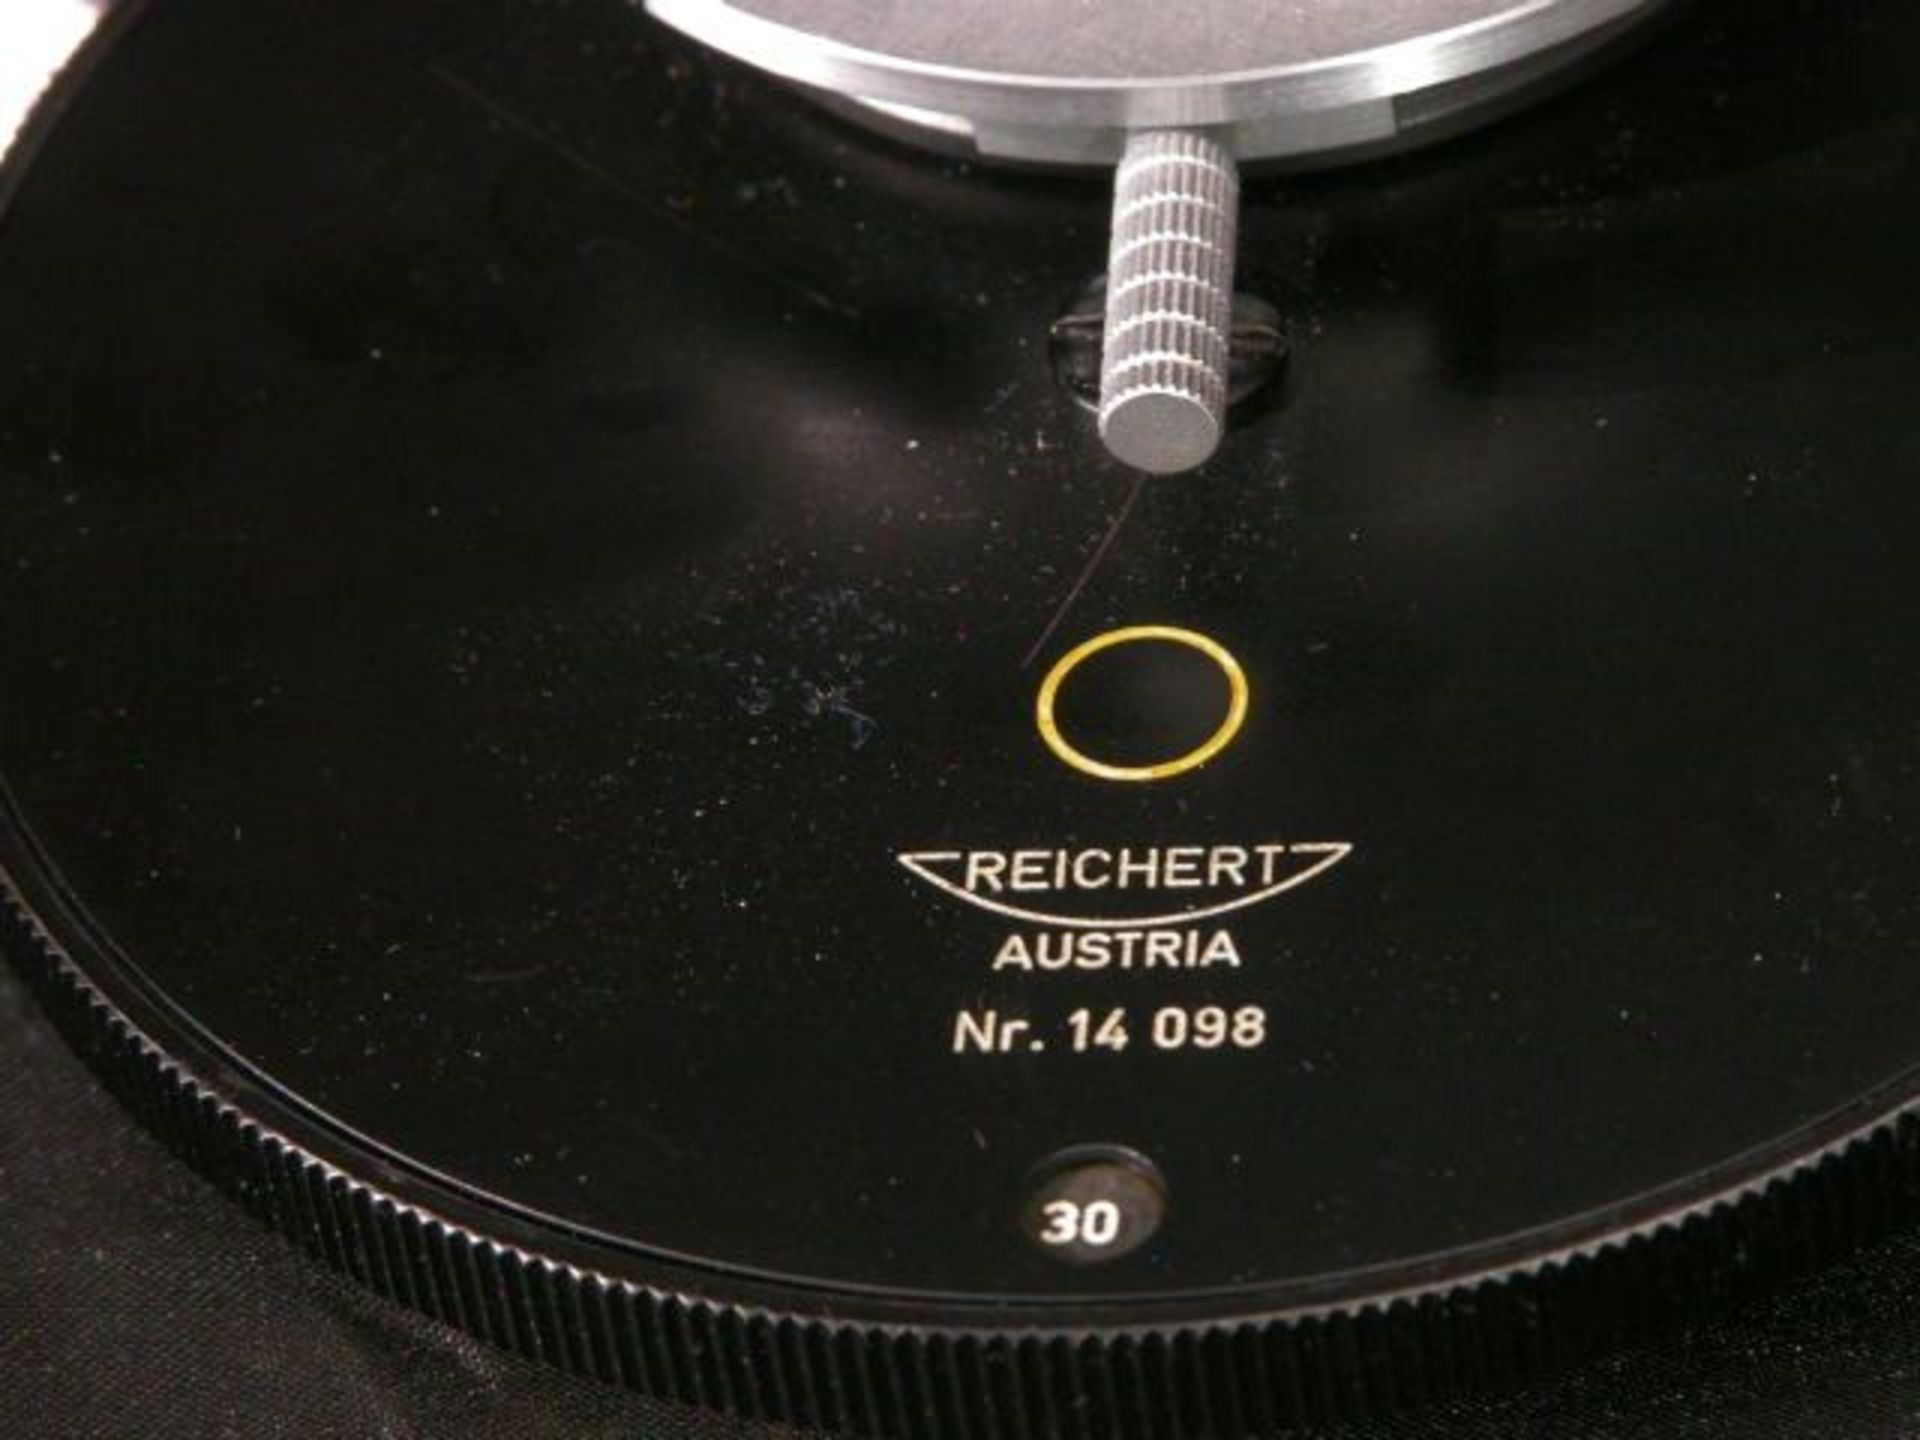 Reichert Austria MICROSCOPE Nr. 14 098 Condenser W/ Iris Dovetail 4 Lenses, Qty 1, 330795621392 - Image 2 of 6